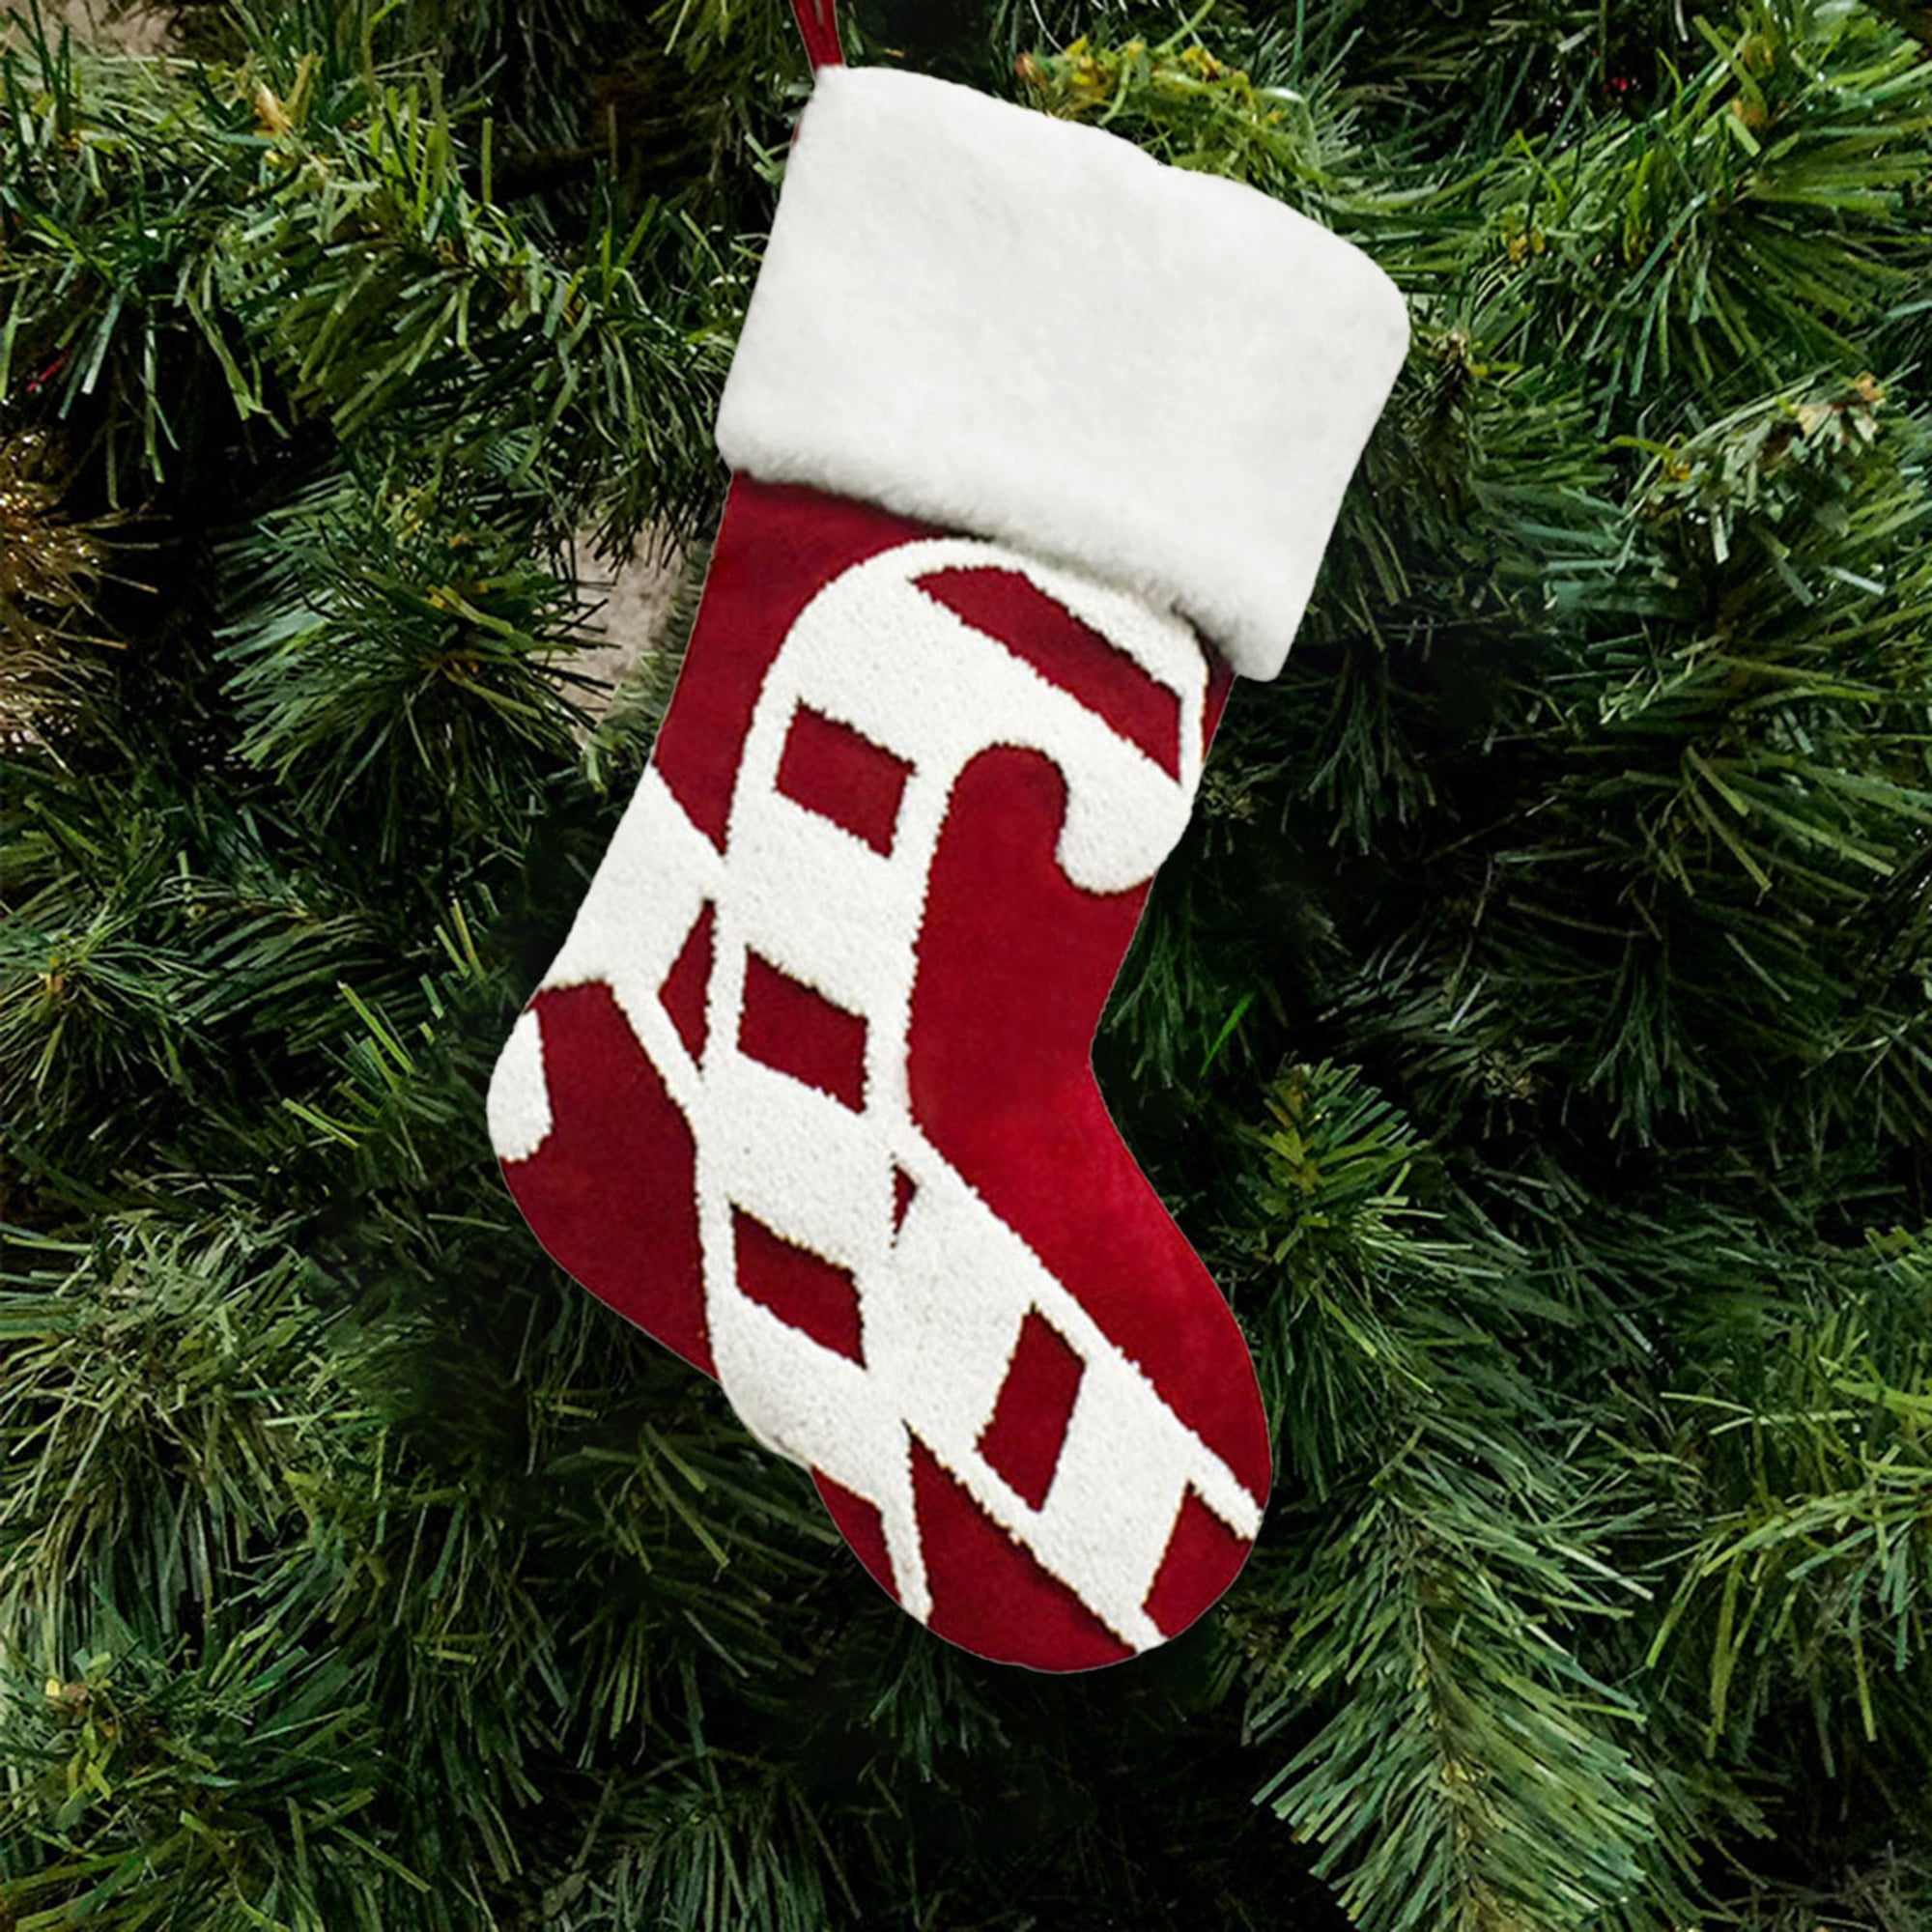 Creative Sock,Christmas Tree Leaves Printed Sock,Christmas Sock,Soft Daily Sock,Cute Sock,Fashion Cotton Sock,Christmas Gift for Her